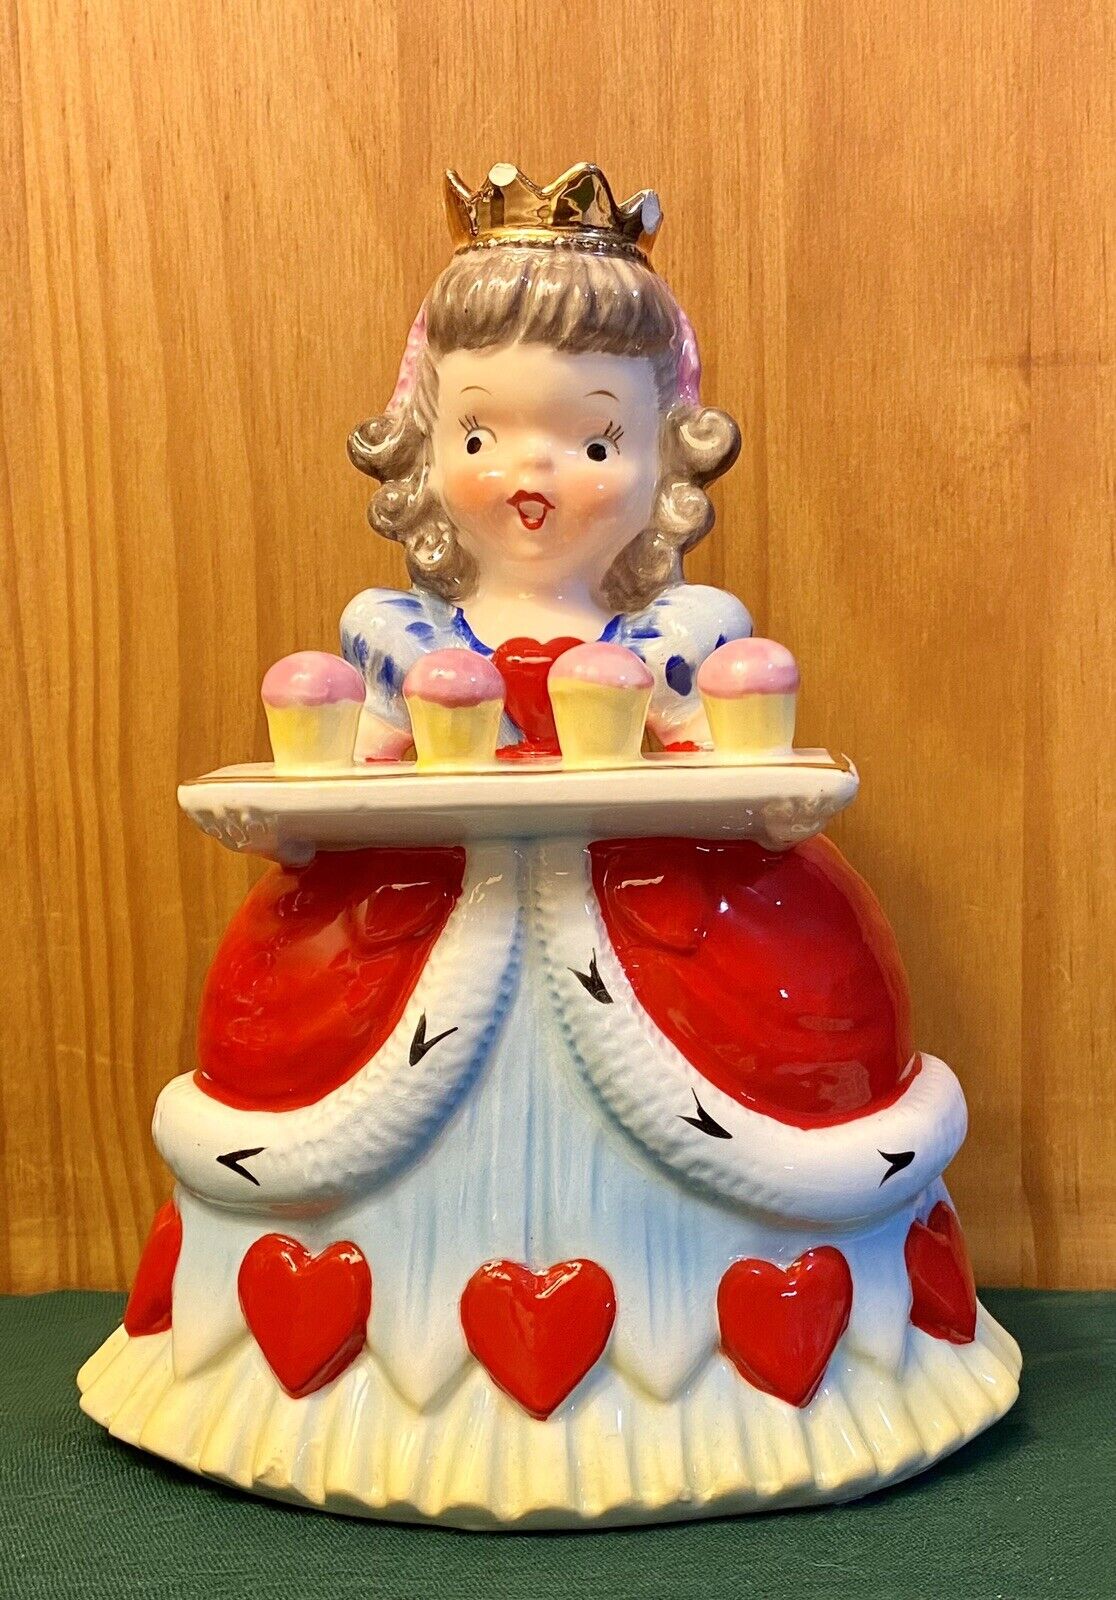 Vintage 1956 NAPCO Queen of Hearts Nursery Rhyme Figurine Planter, A1720F, Japan